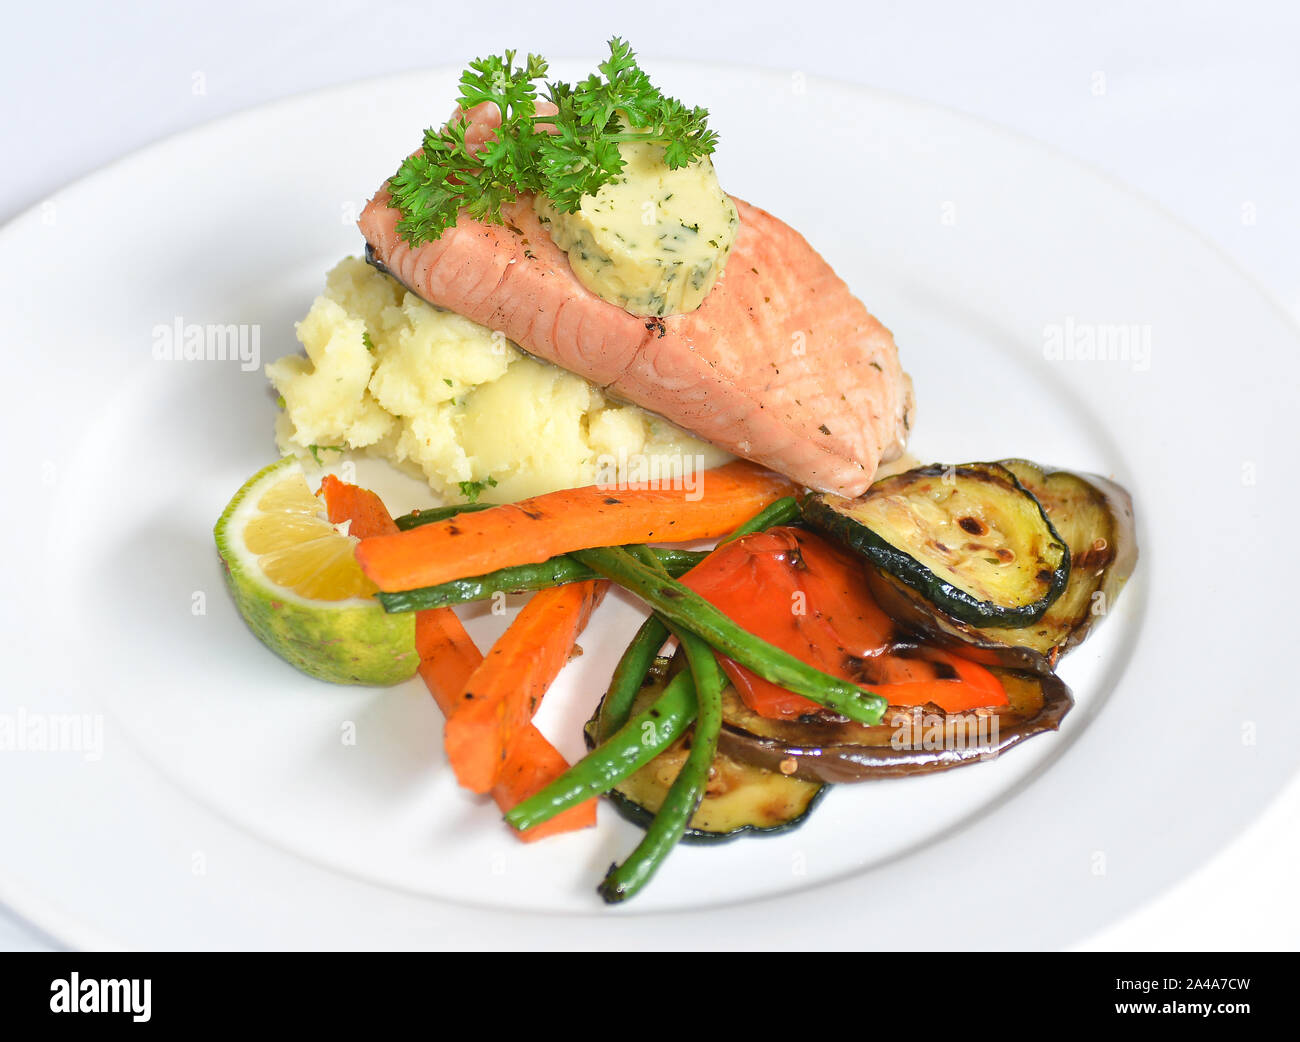 continental cuisine, restaurant, menu, food photography, menu photos Stock Photo